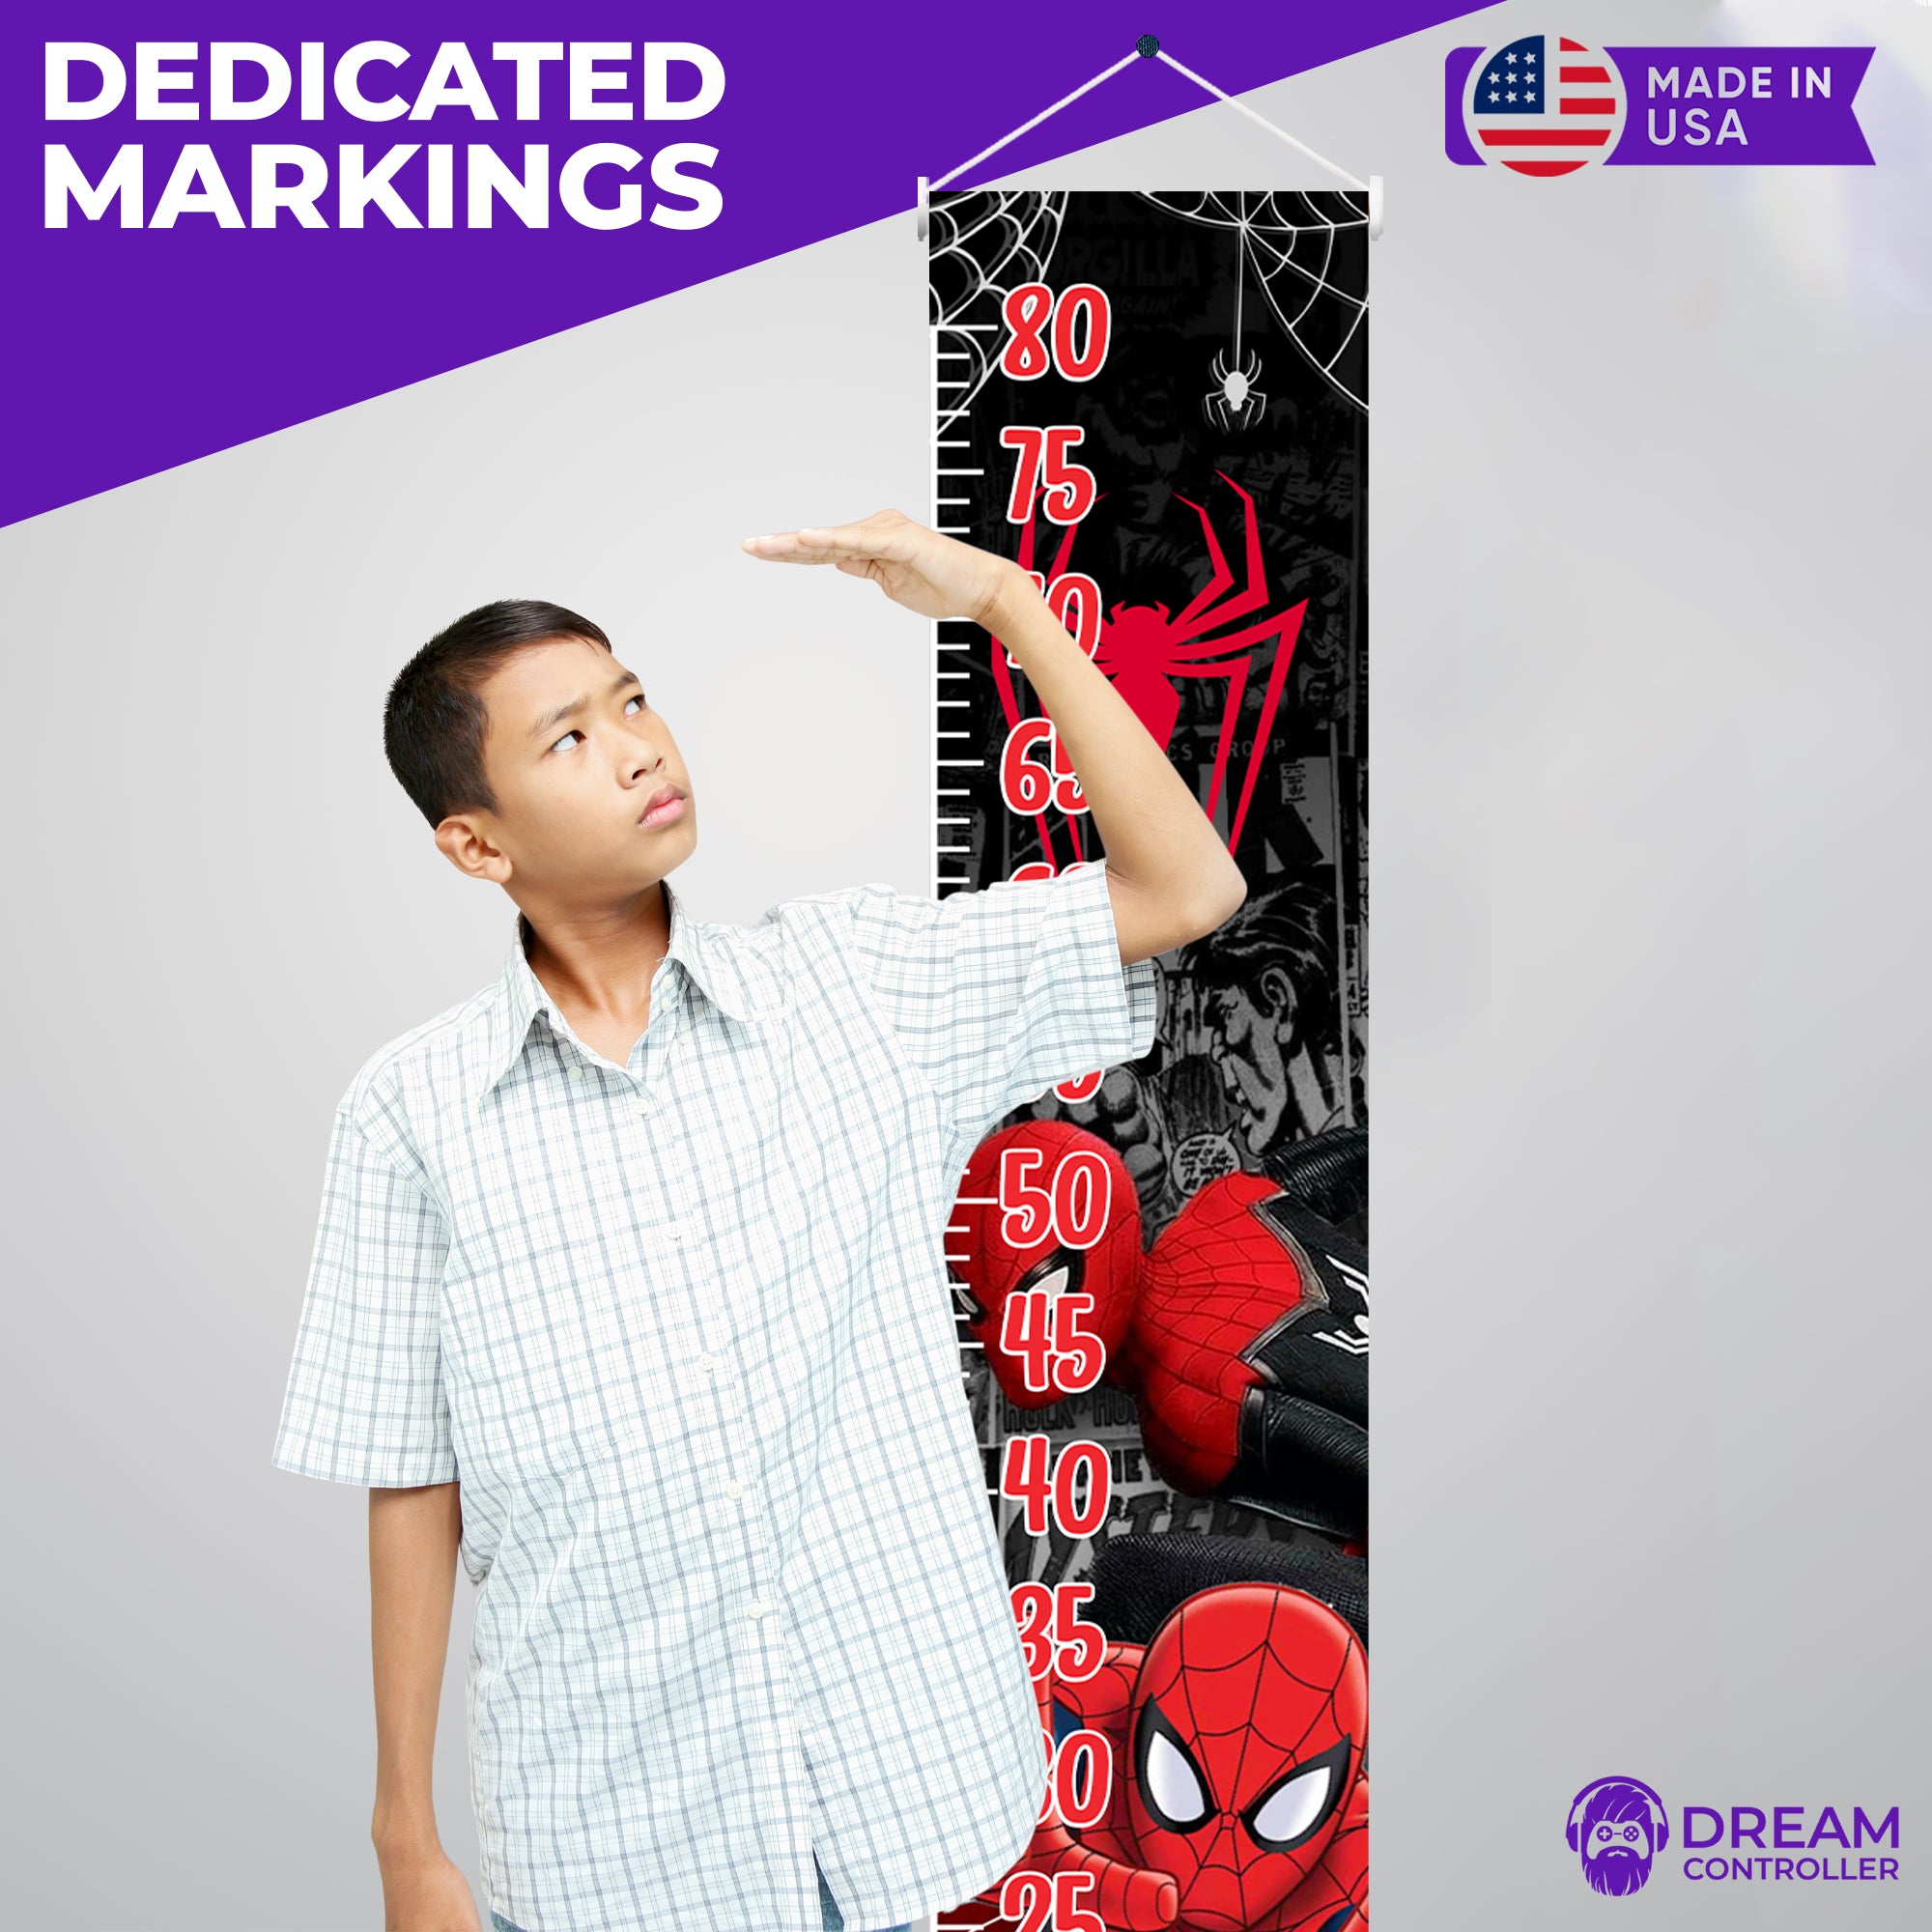 Dream Controller Spiderman Teens Growth Chart